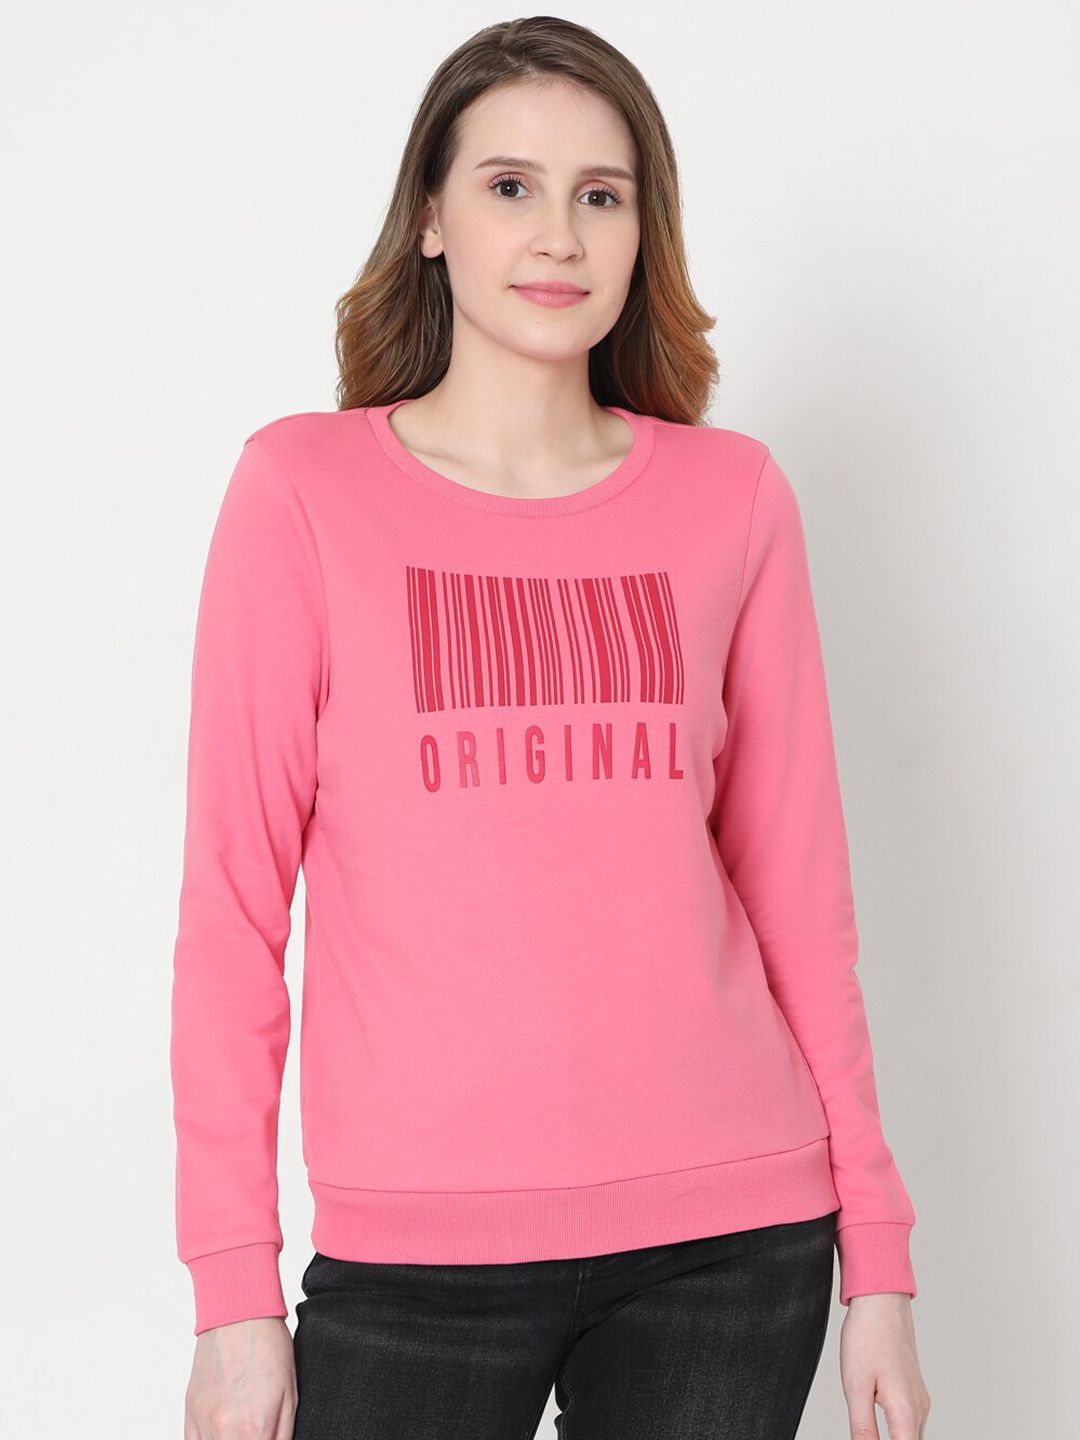 Vero Moda Women Pink Printed Sweatshirt Price in India